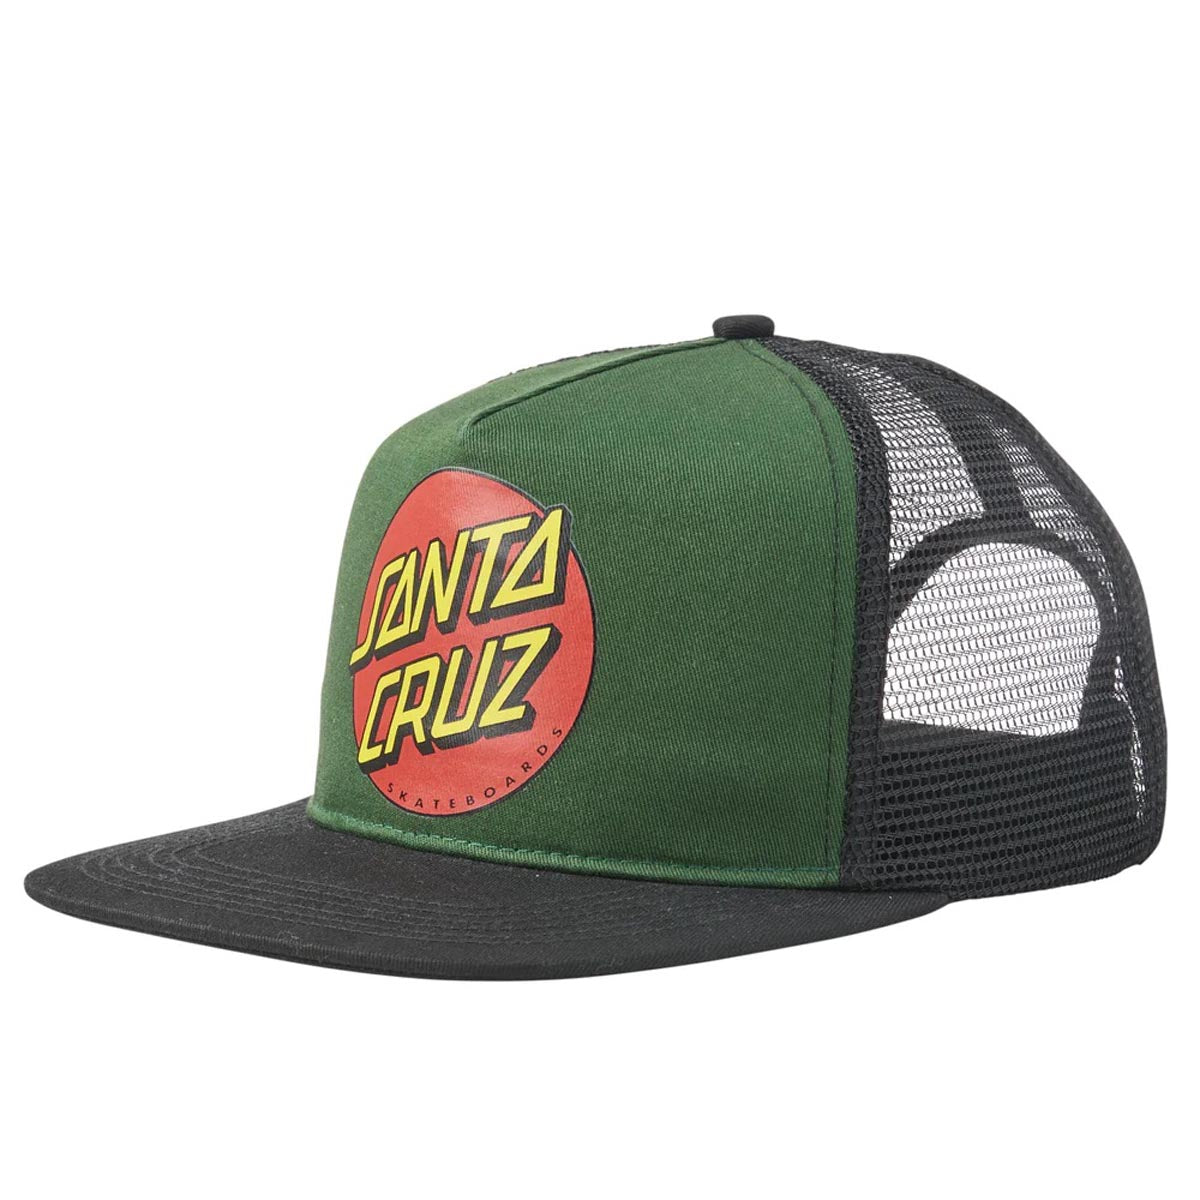 Santa Cruz Classic Dot Mesh Trucker Hat - Dark Green/Black image 1